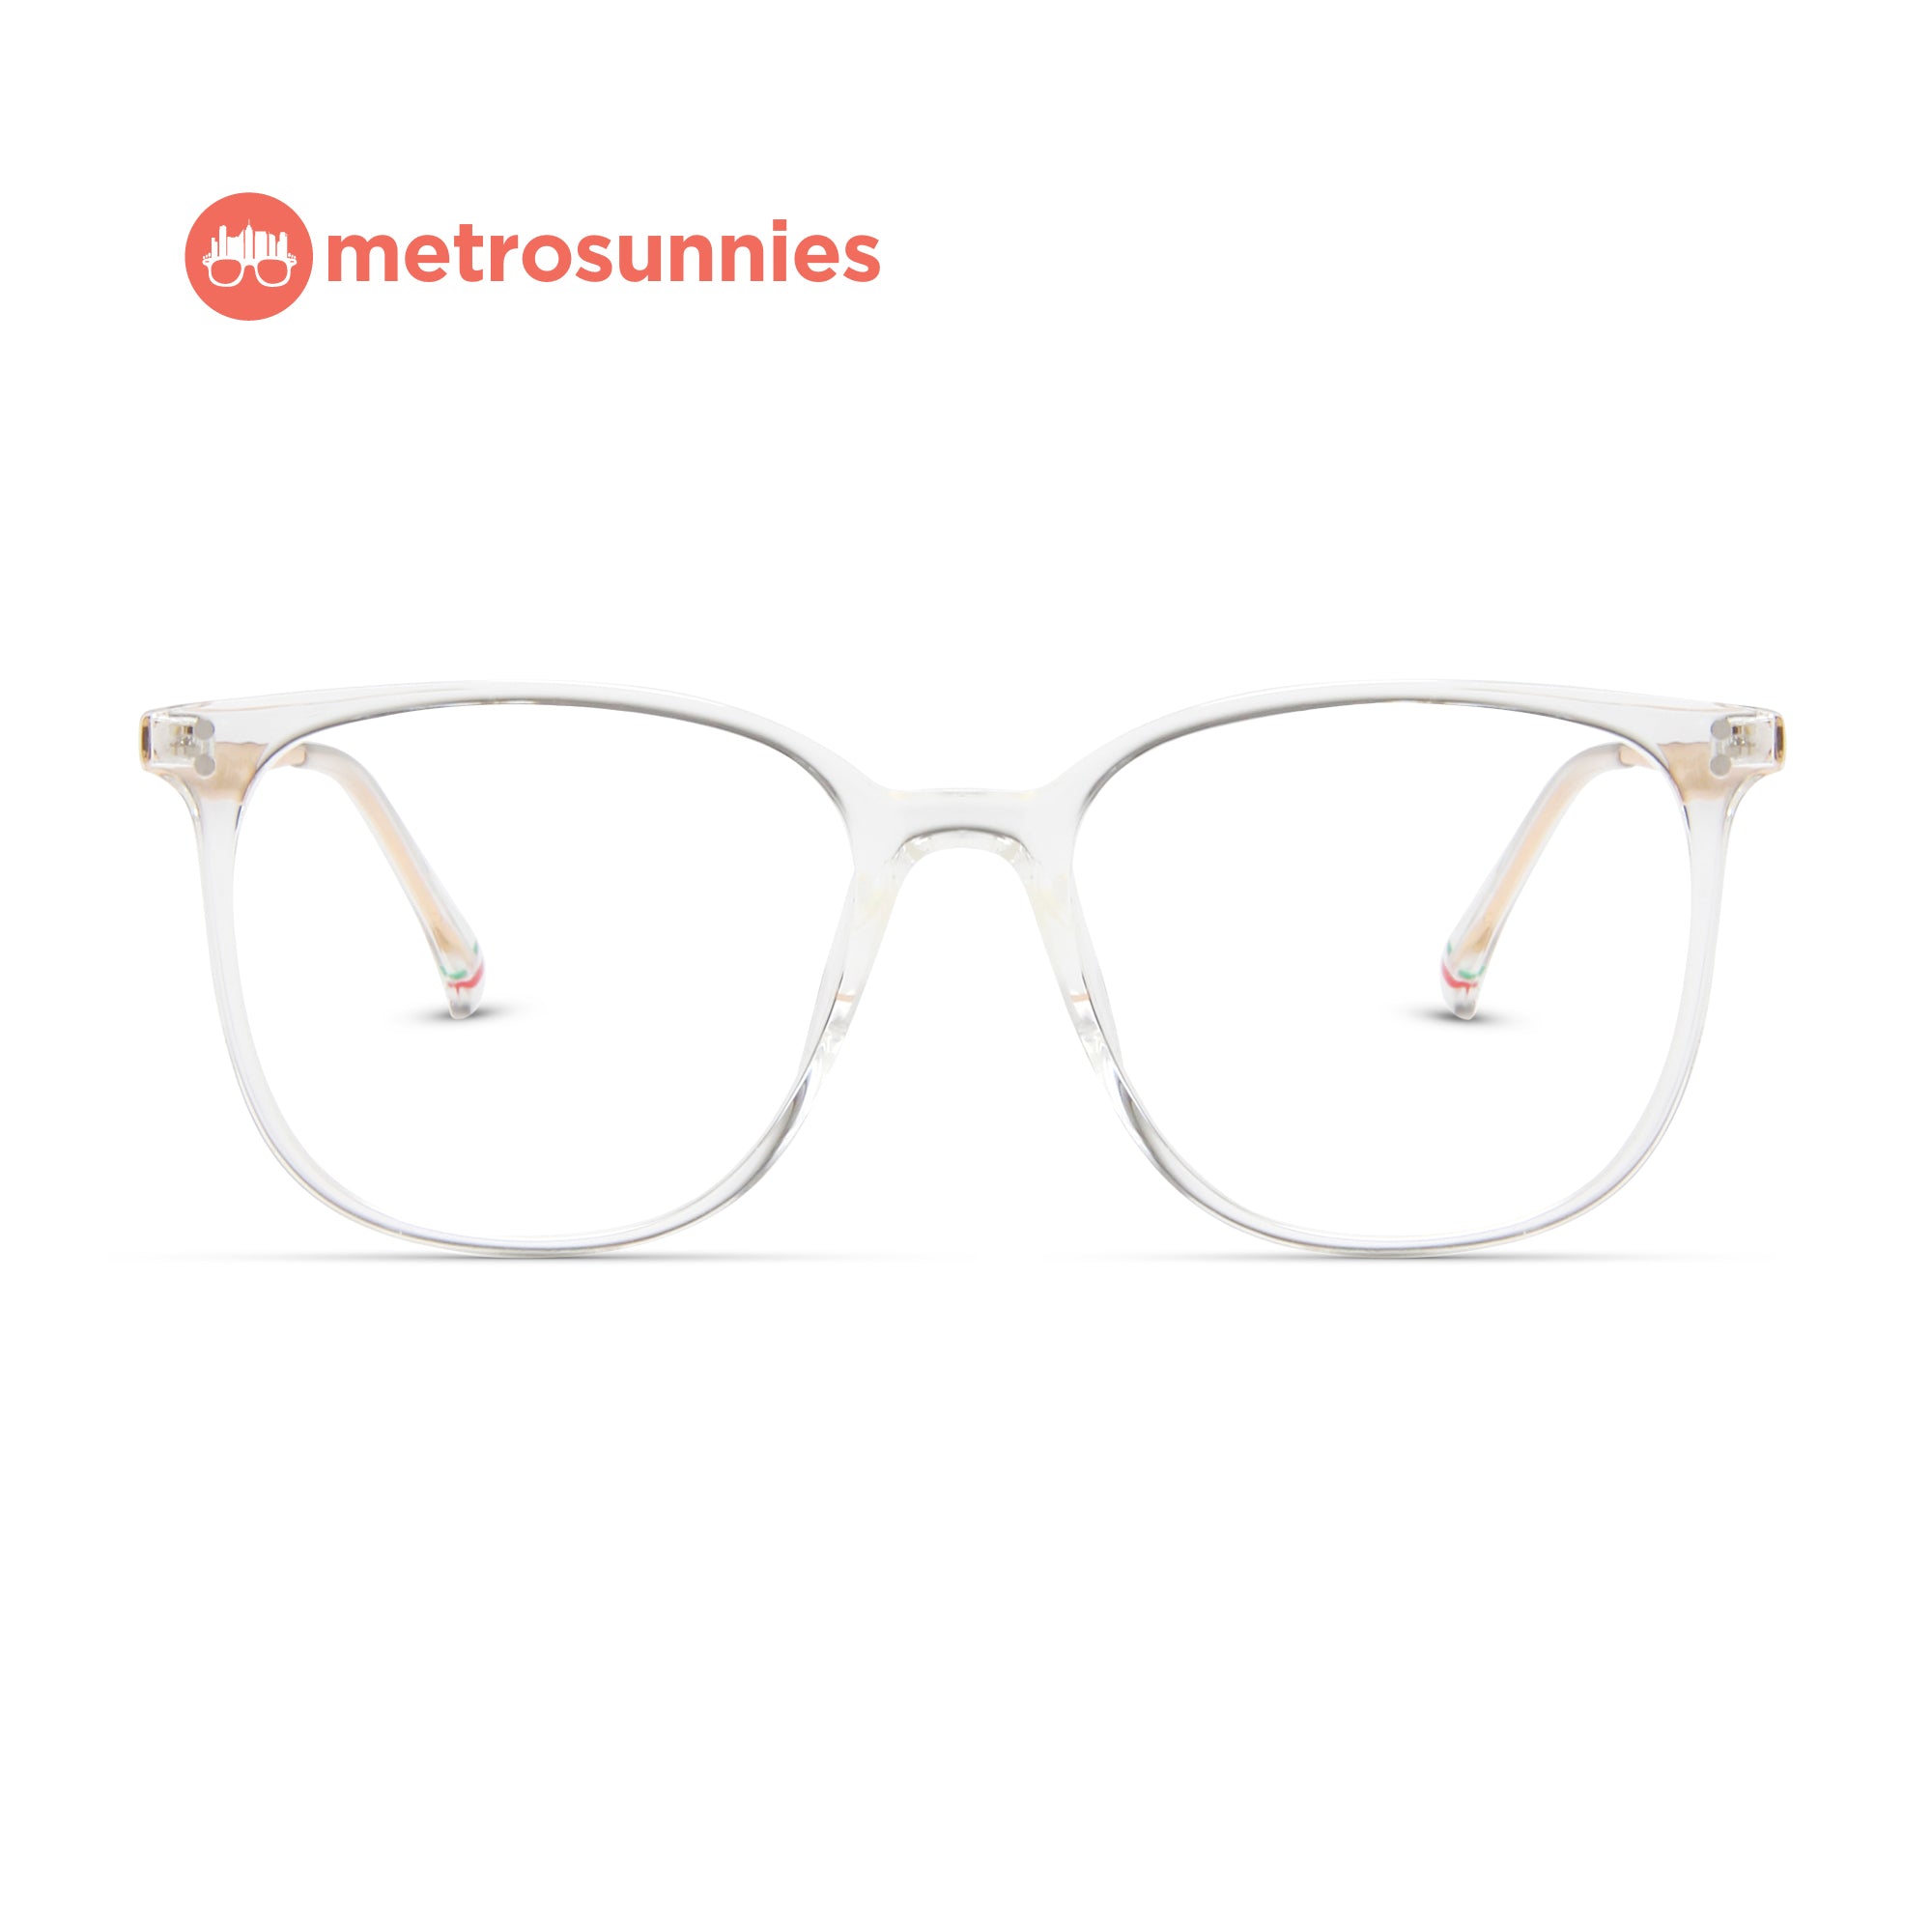 MetroSunnies Fox Specs (Clear) / Con-Strain Blue Light / Versairy / Anti-Radiation Eyeglasses